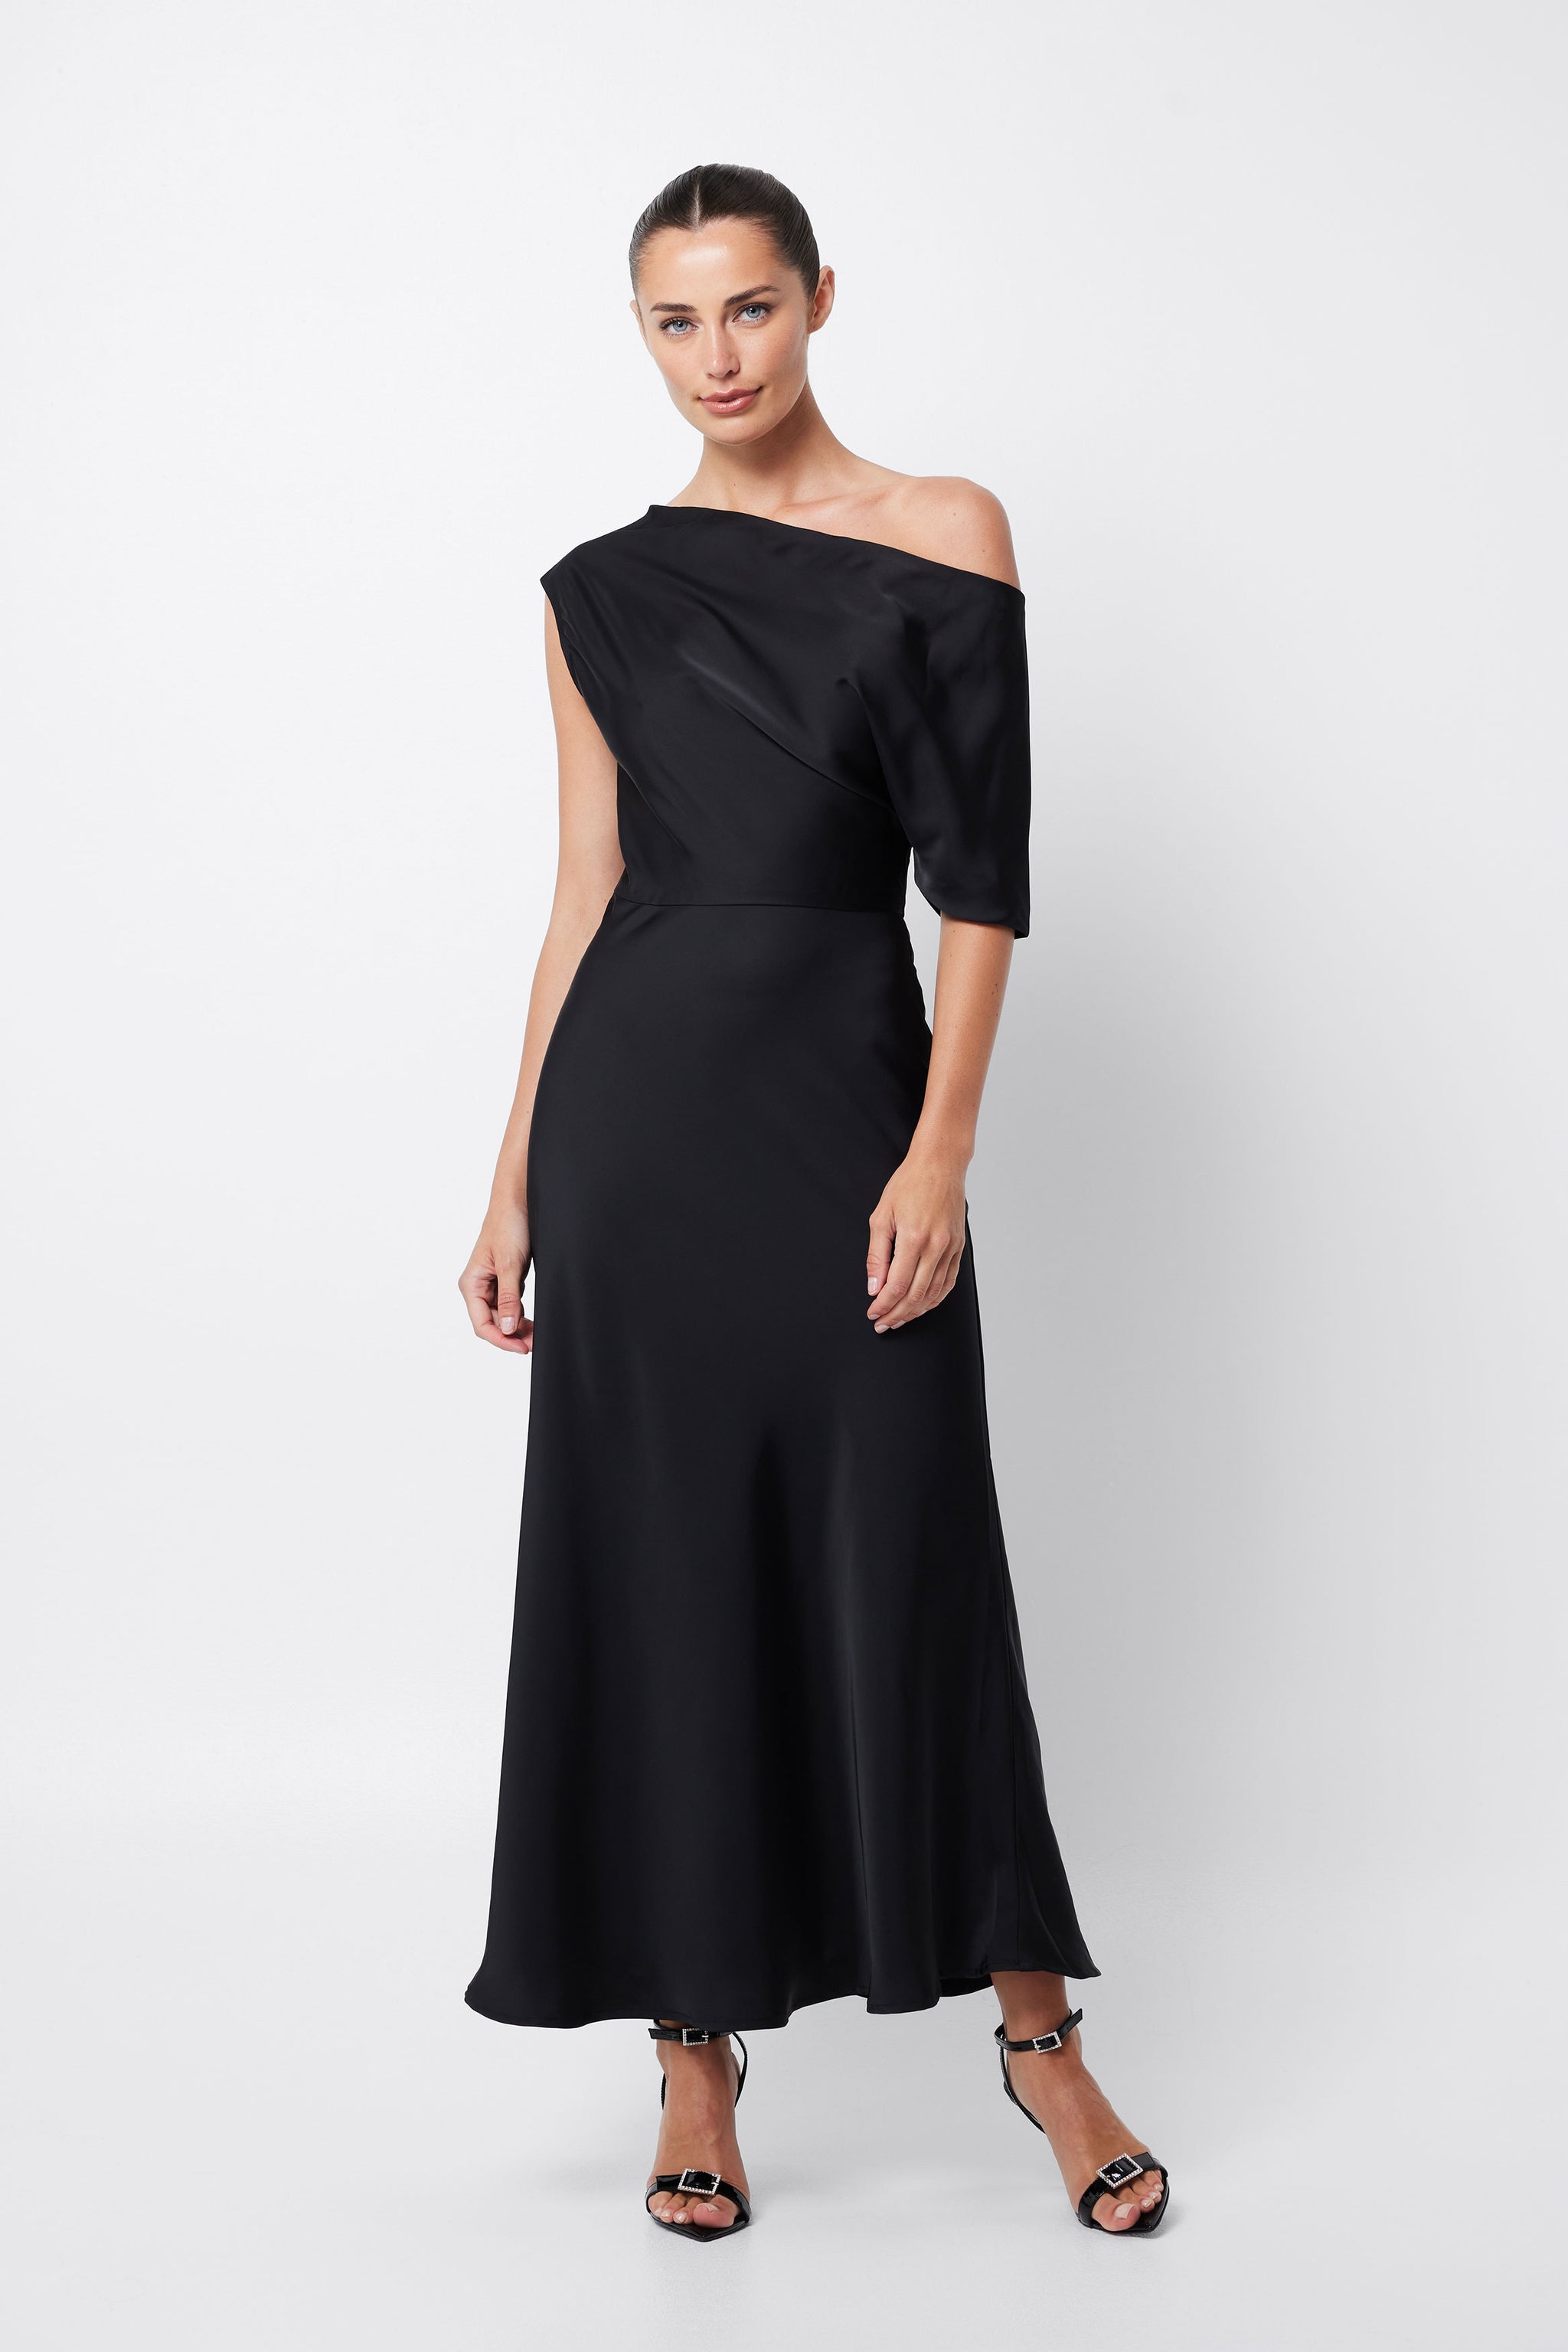 Mossman | Occasionwear | Bridesmaid & Formal Event Dresses